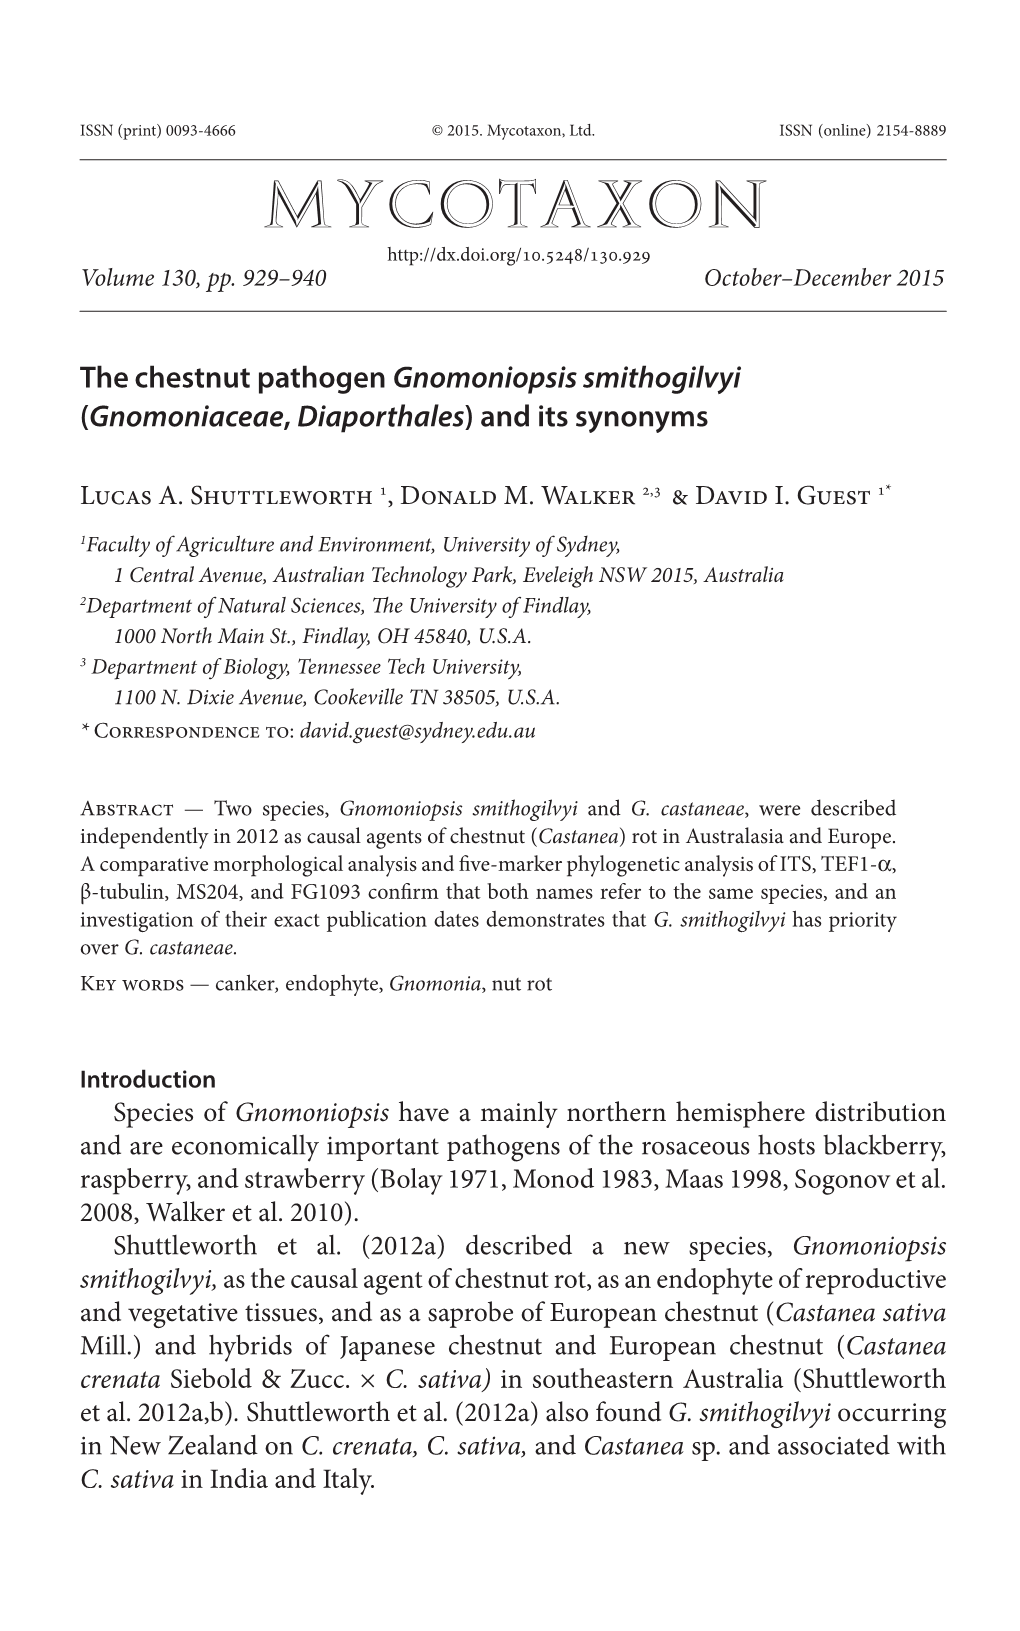 The Chestnut Pathogen Gnomoniopsis Smithogilvyi (Gnomoniaceae, Diaporthales) and Its Synonyms